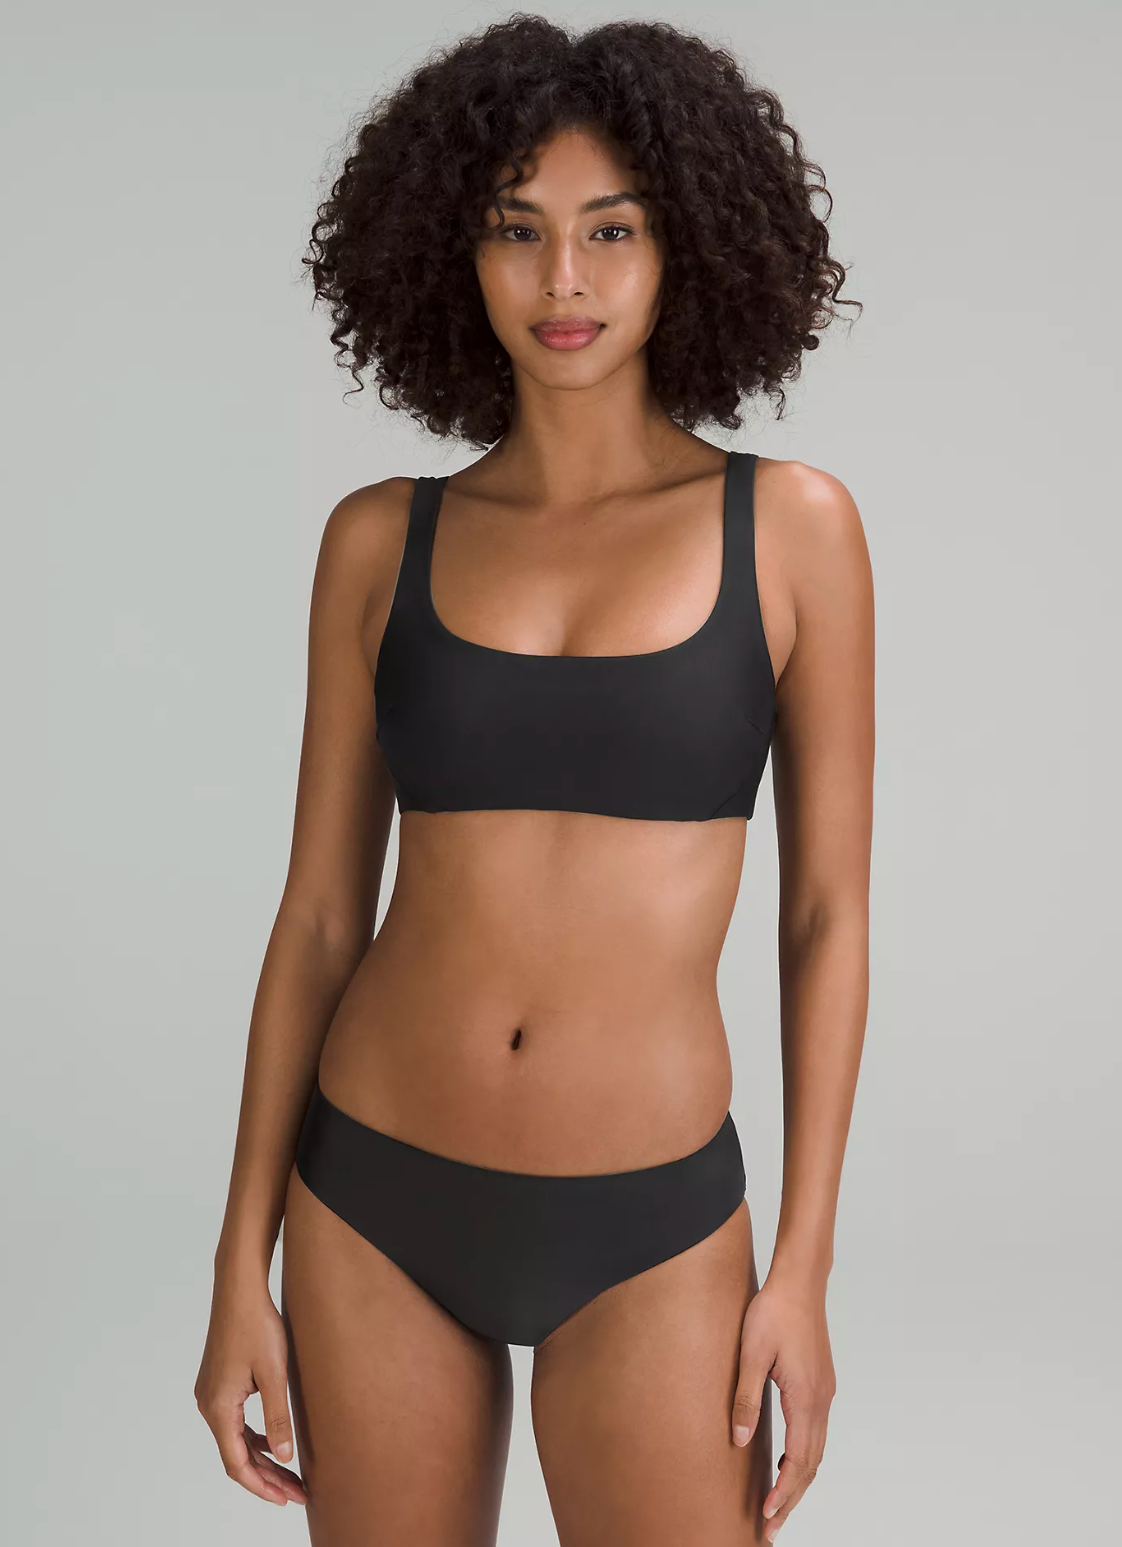 Best Black Bikinis Chic, Versatile, Mix and Match image